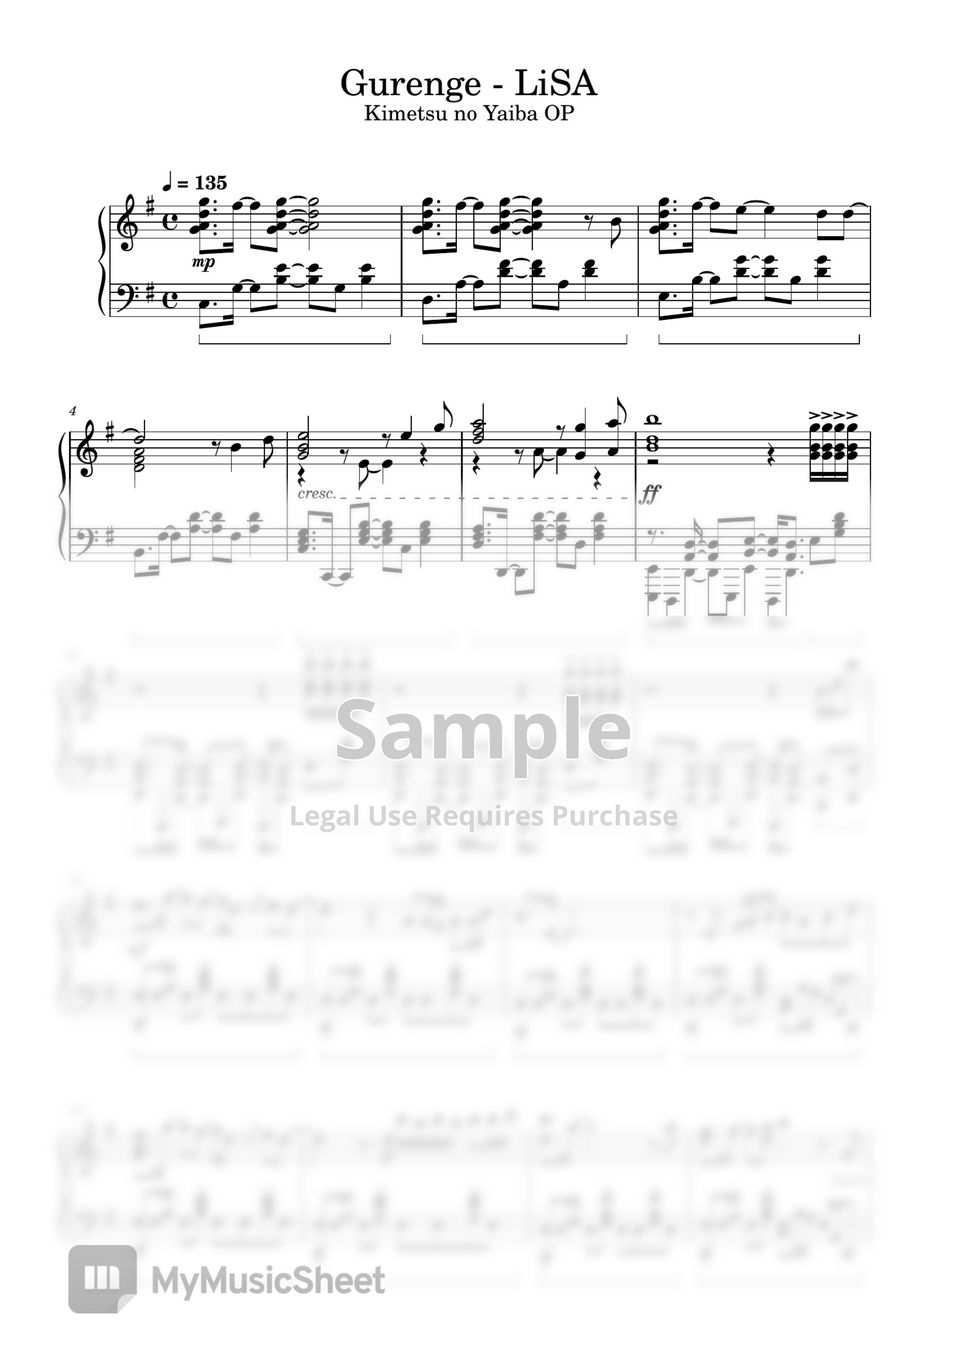 LiSA - Gurenge - LiSA (Kimetsu no Yaiba OP) Piano by BWC Piano Tutorial